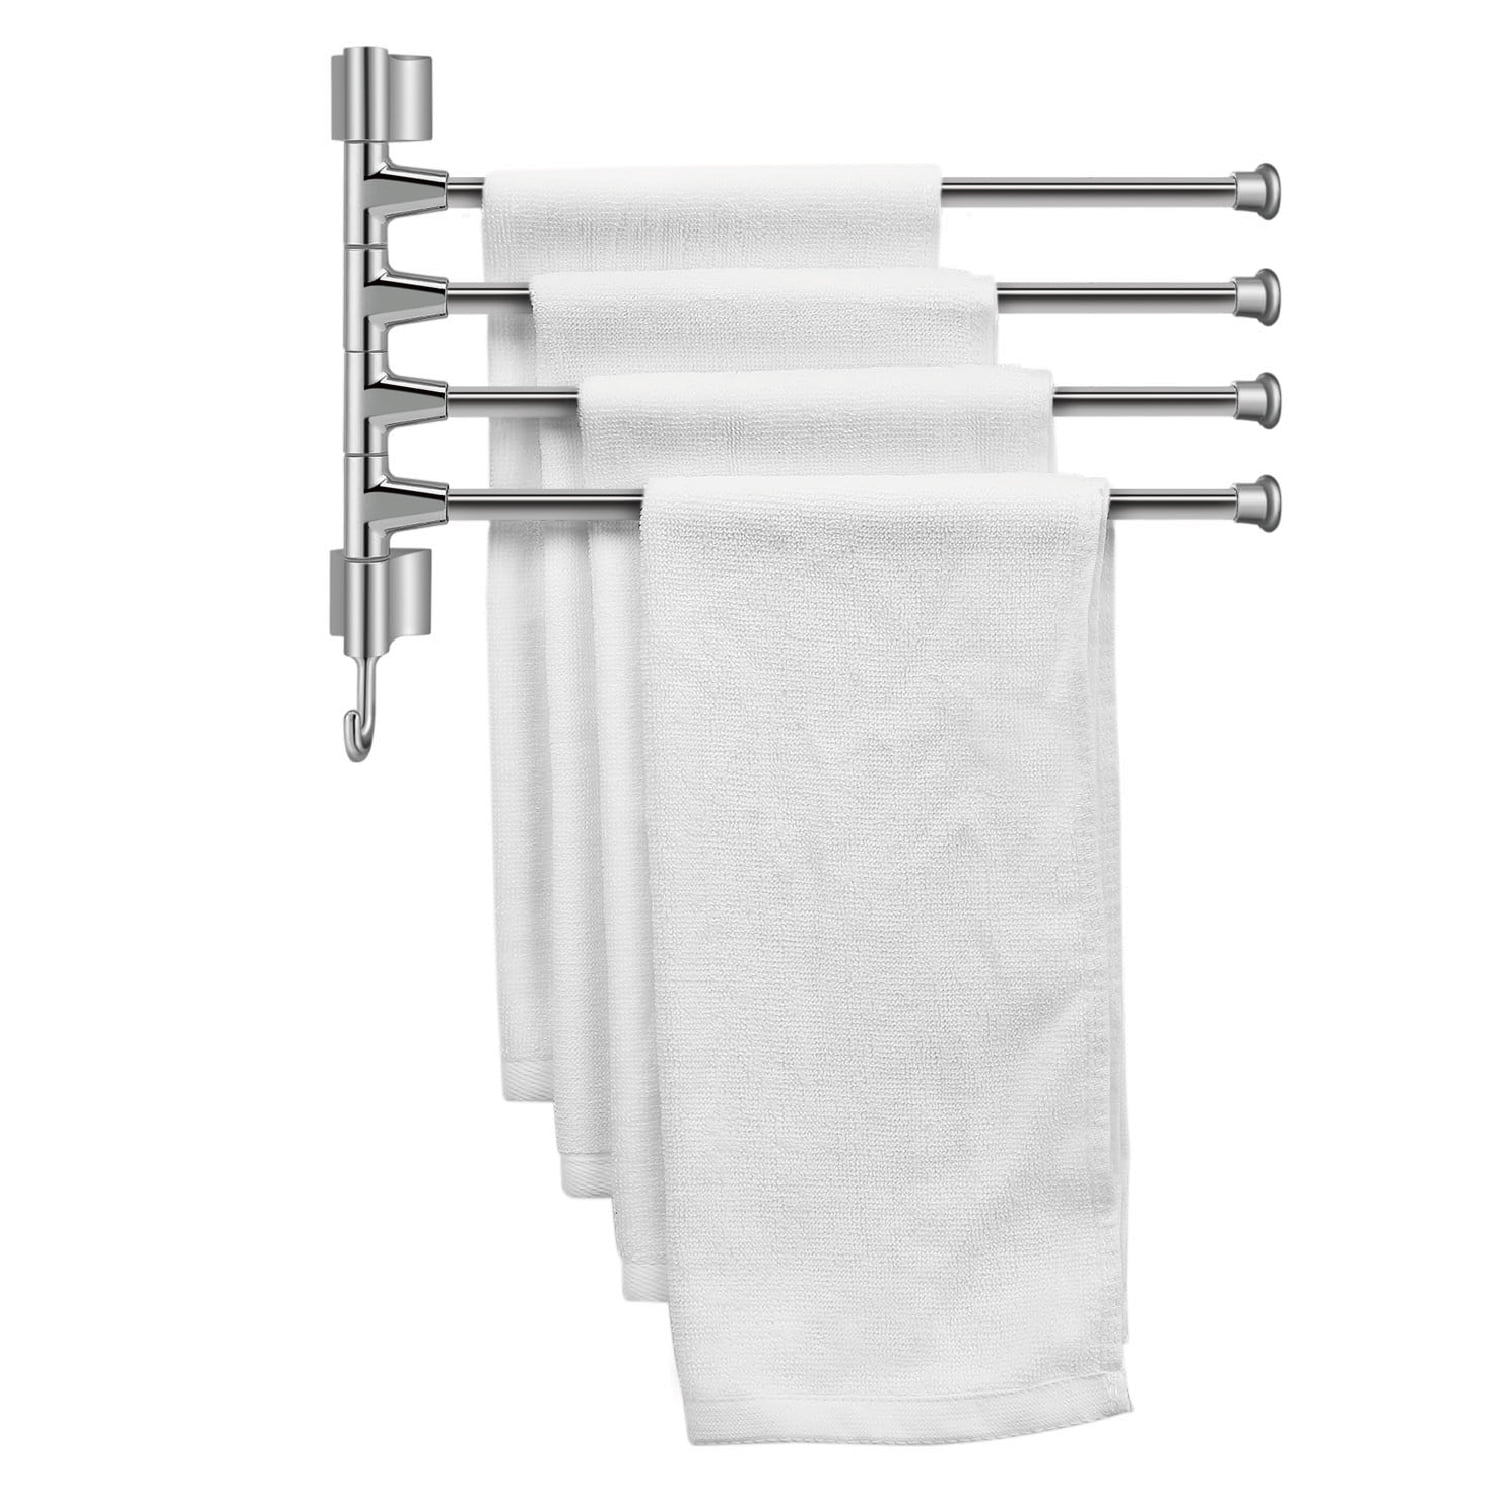 180° Wall Mounted Bathroom Towel Rack 2 Swivel Rail Hanger Shelf Stainless Steel